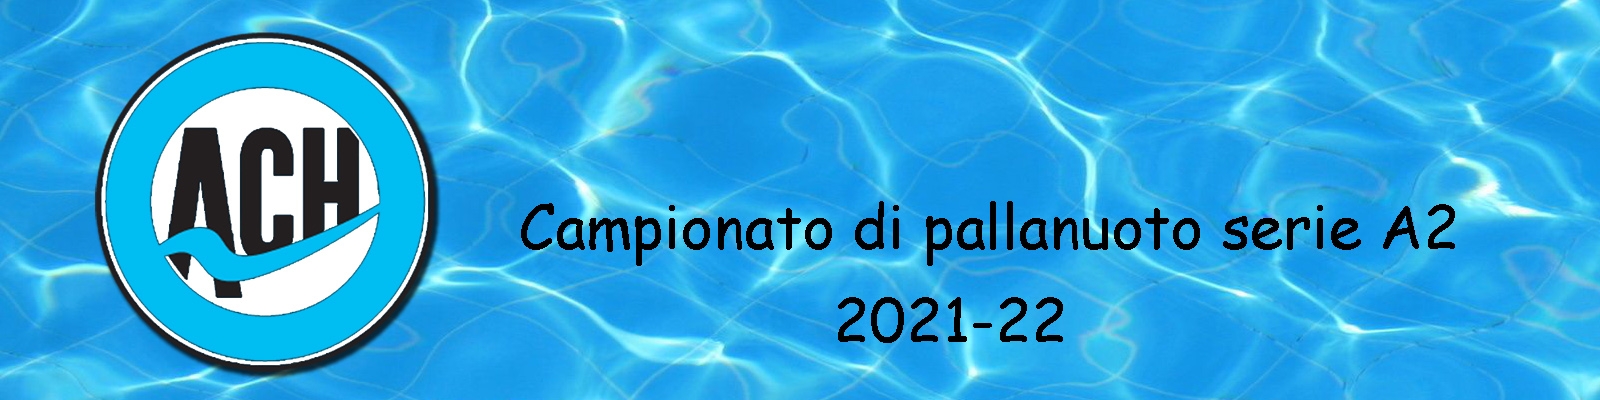 Acquachiara anno 2021-22